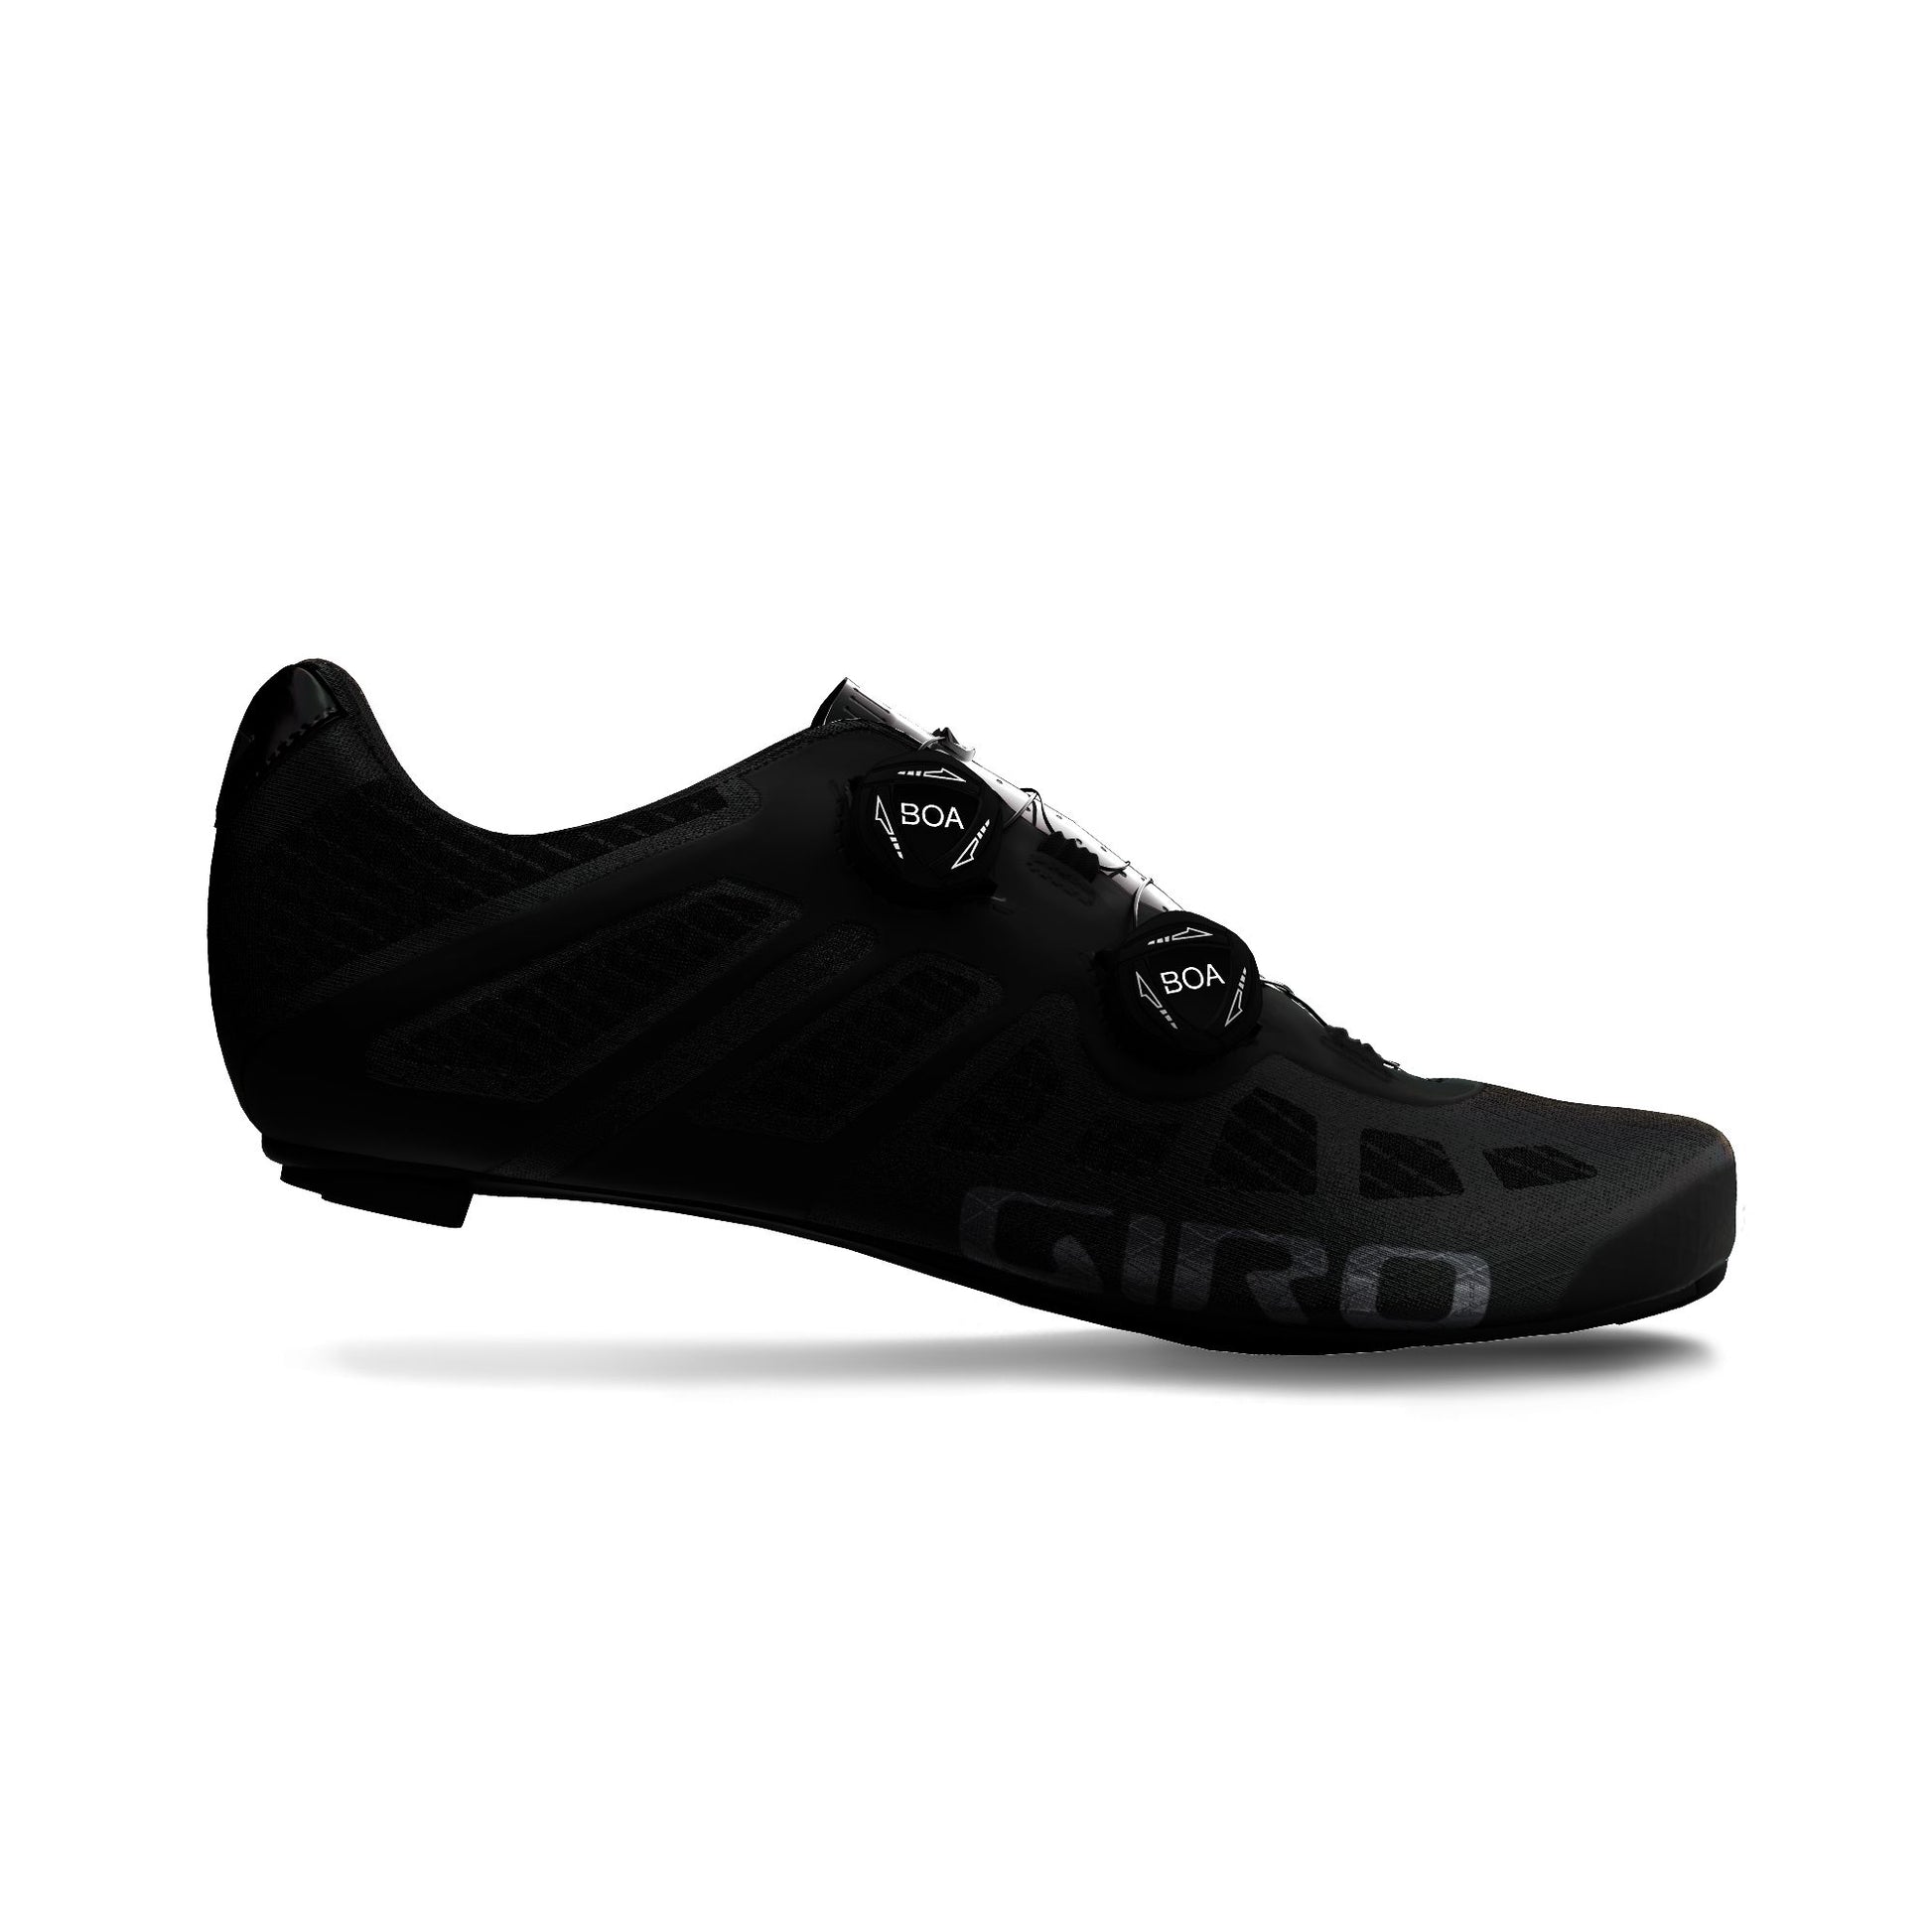 Giro Imperial Shoe Black Bike Shoes